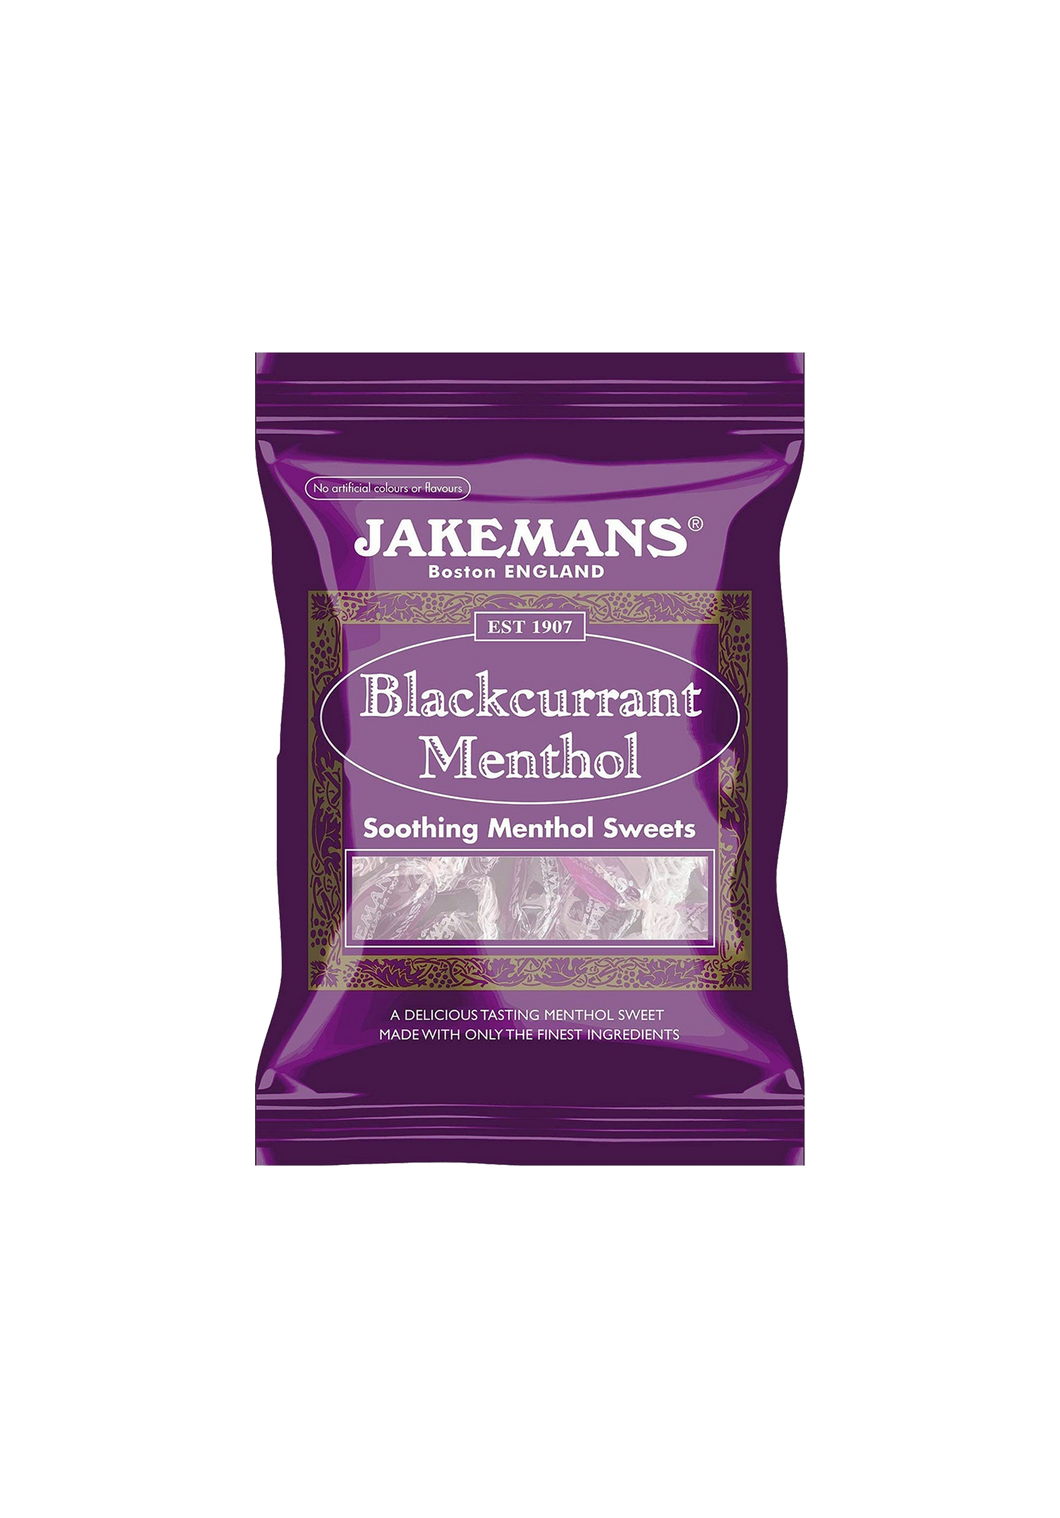 Jakemans Blackcurrant Menthol 100g